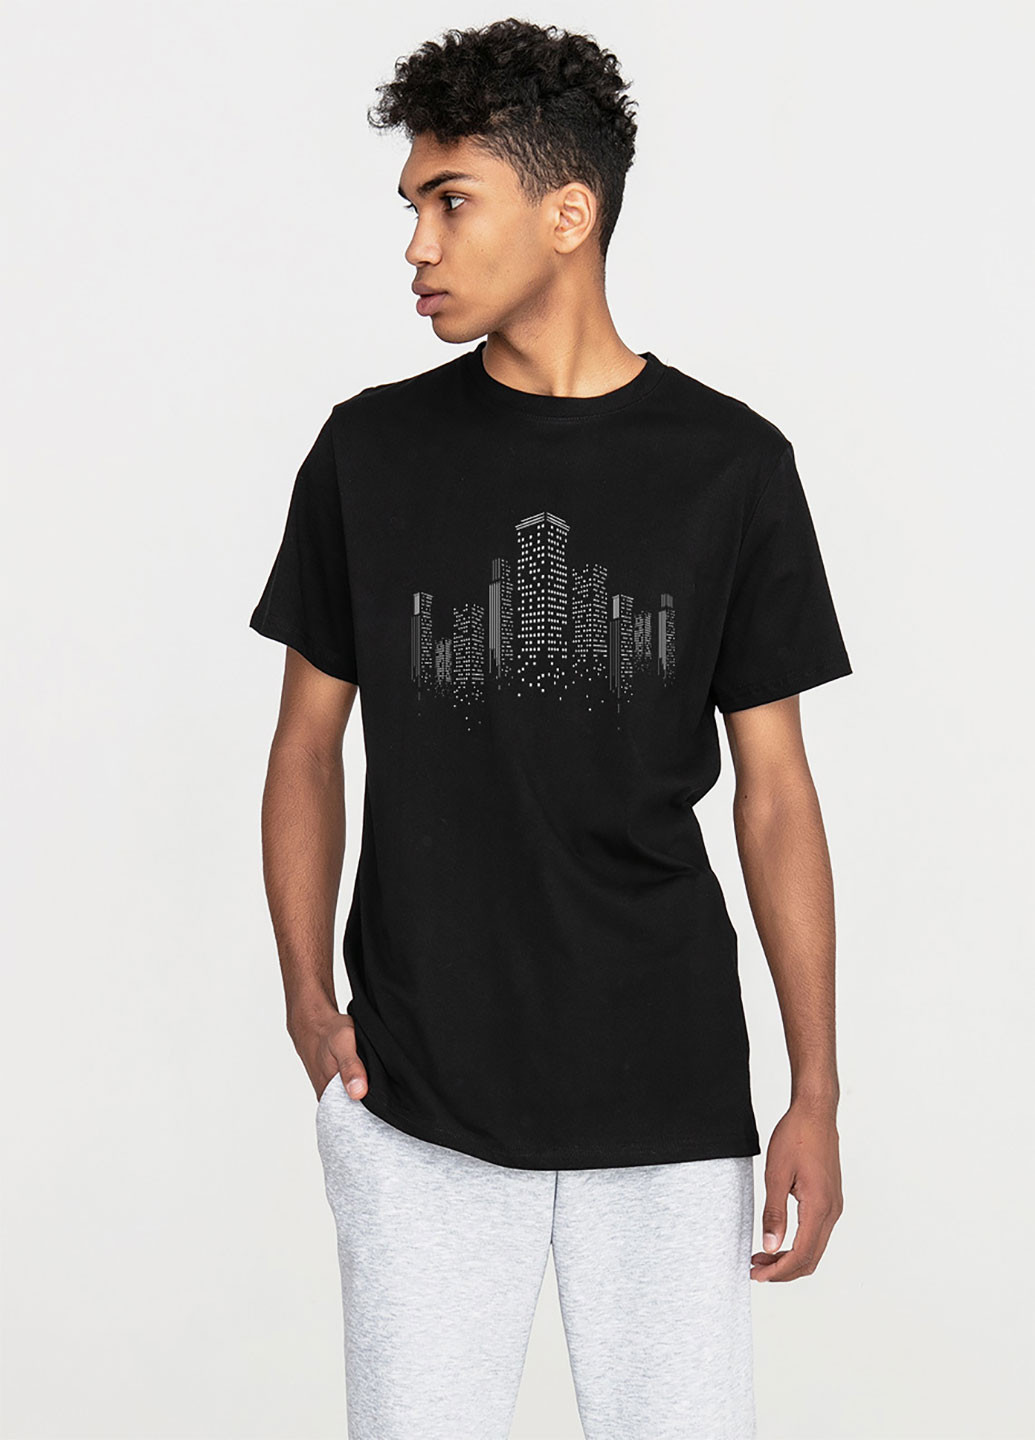 Черная футболка мужская черная big city Love&Live